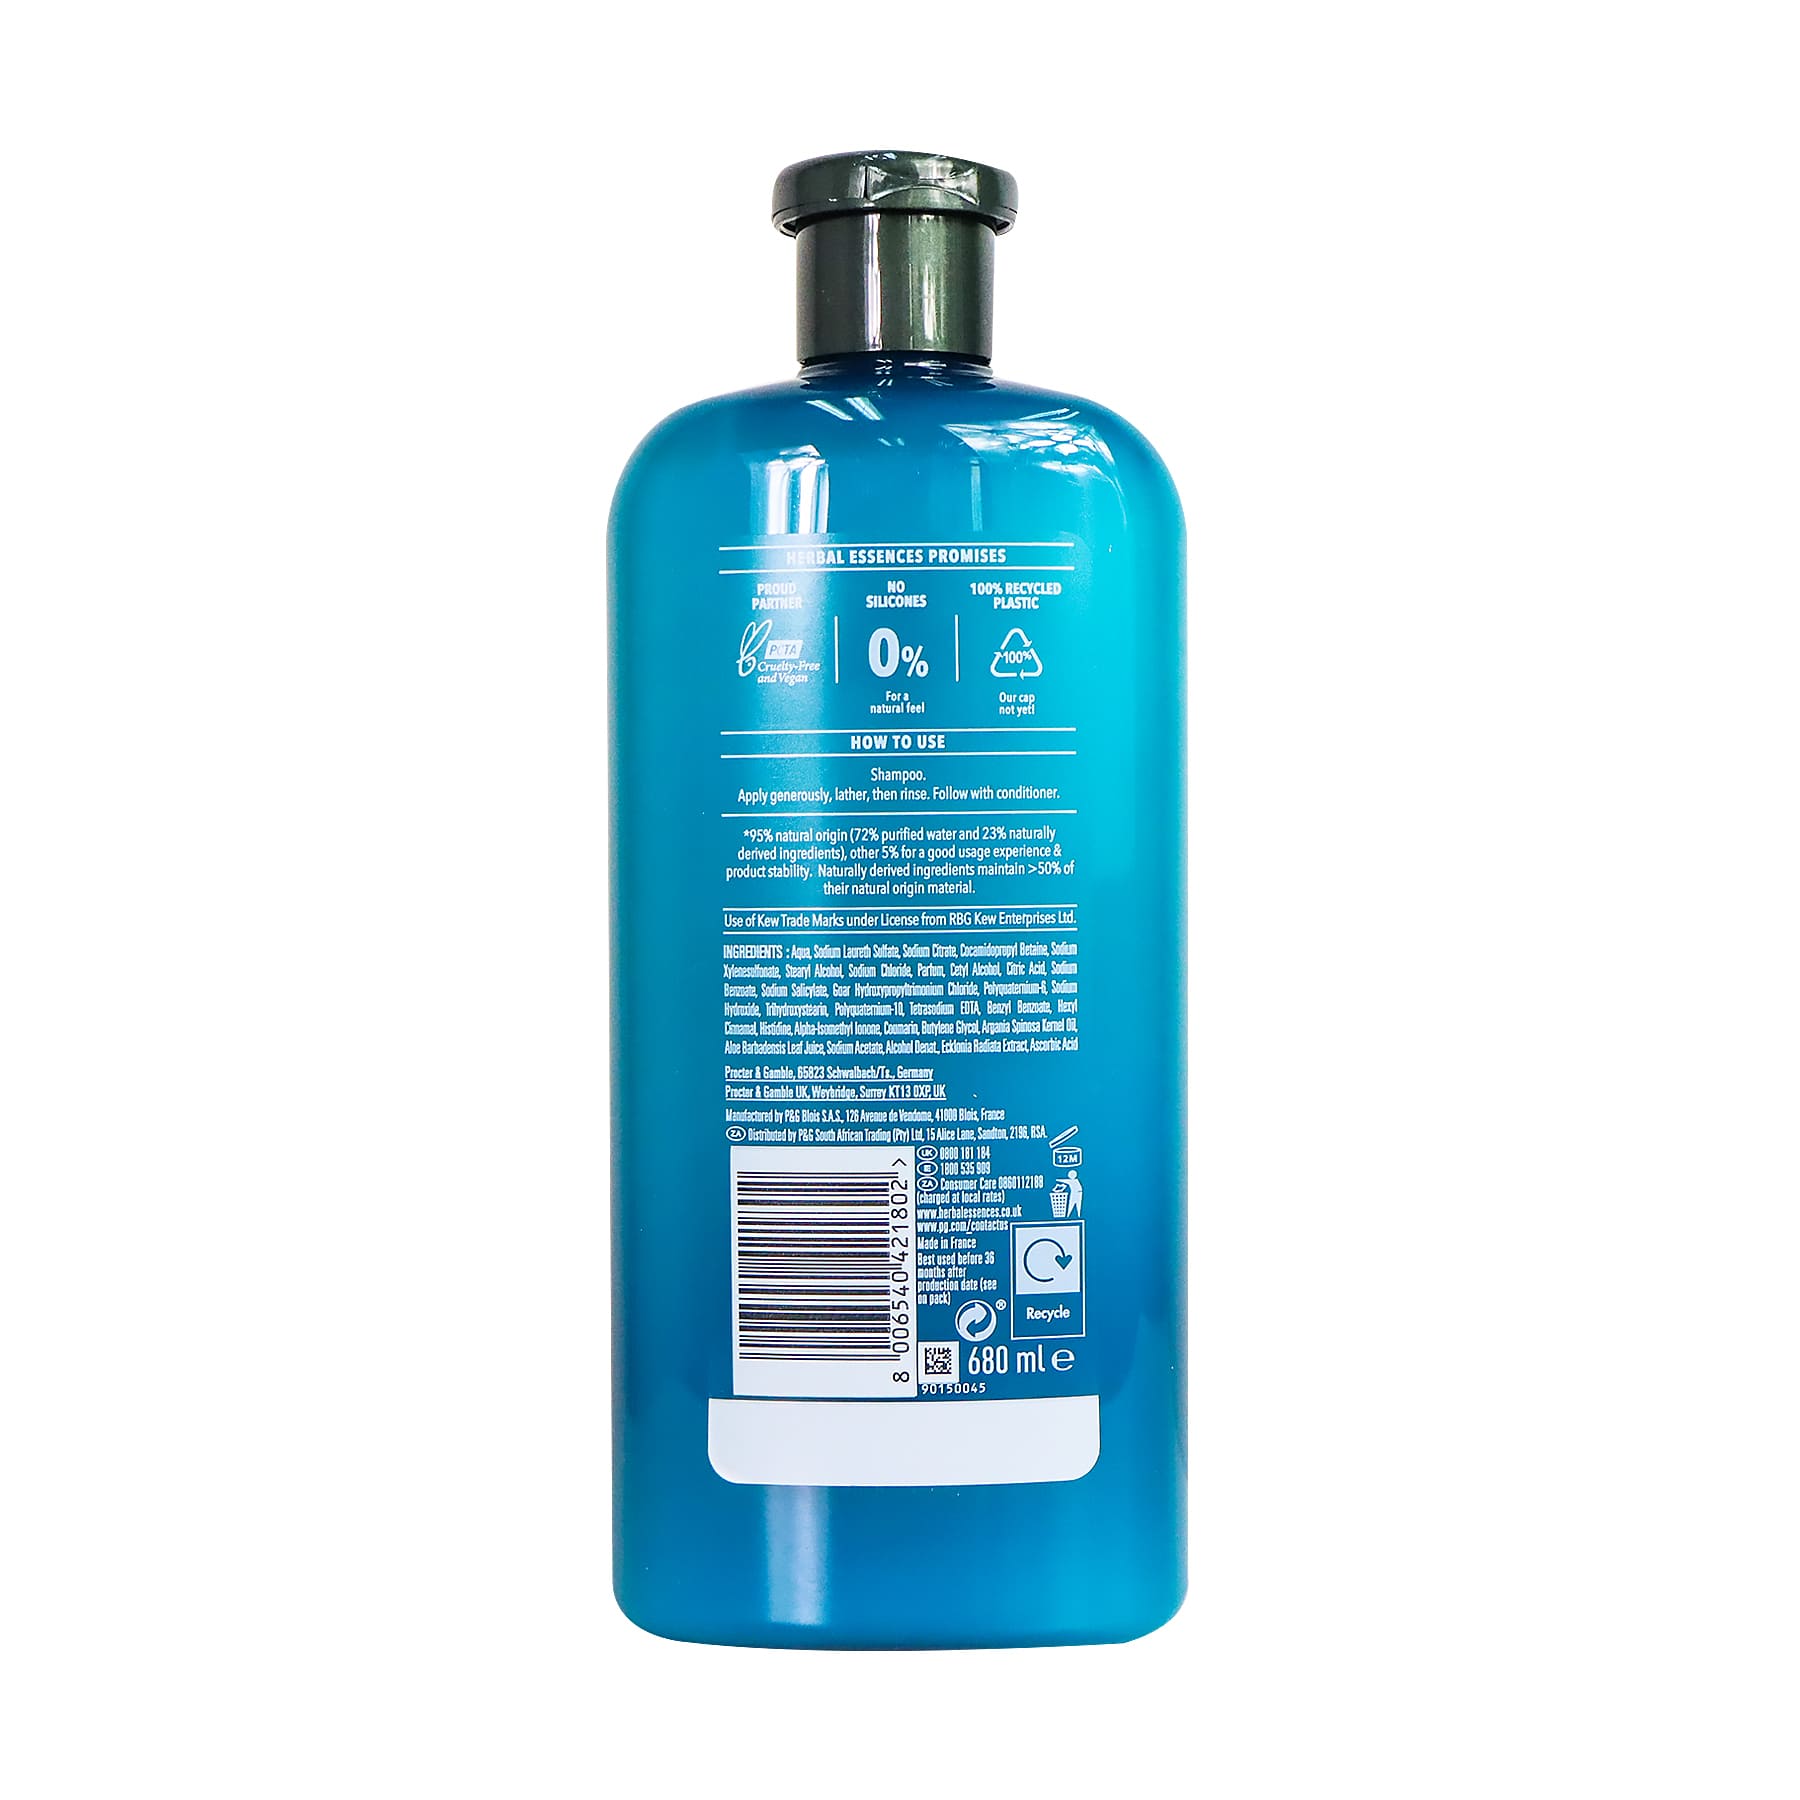 [P&G] Herbal Essences Repair Argan Oil Shampoo 680ml